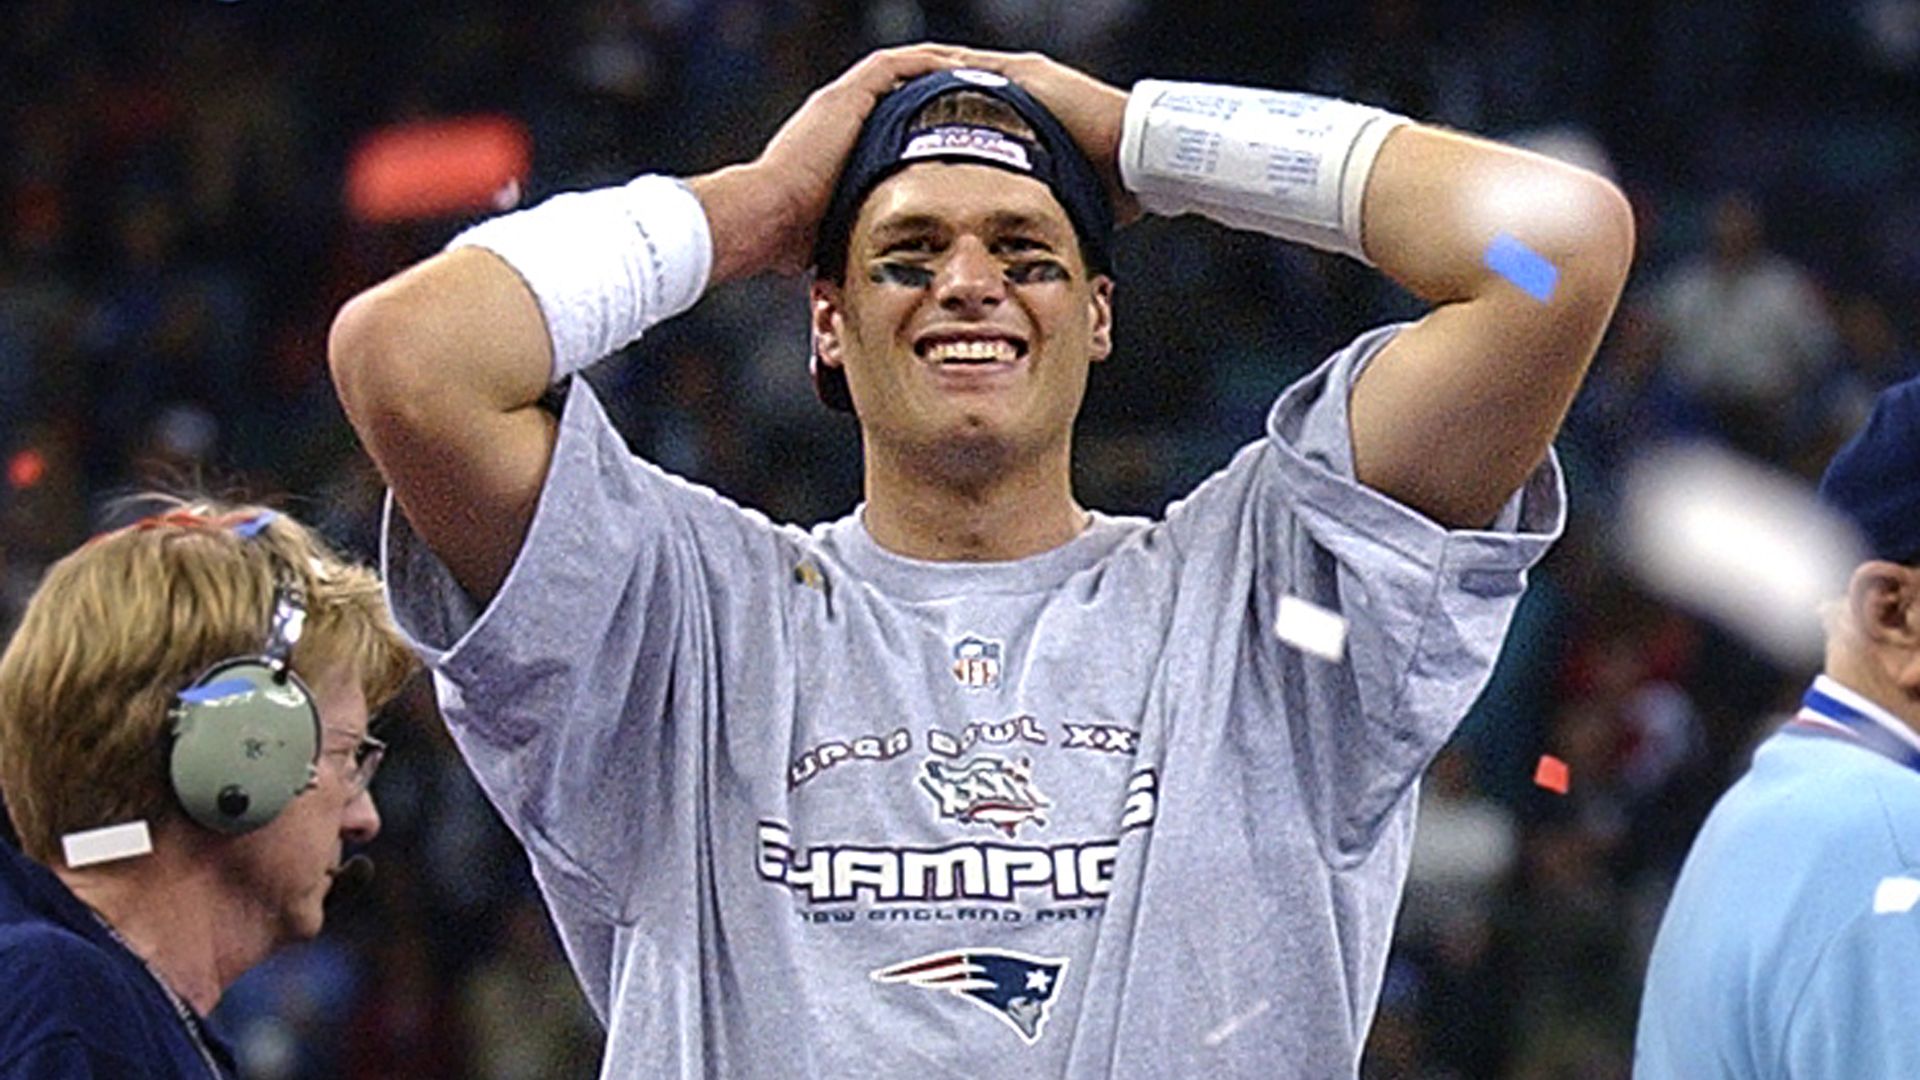 Tom Brady after winning the Super Bowl